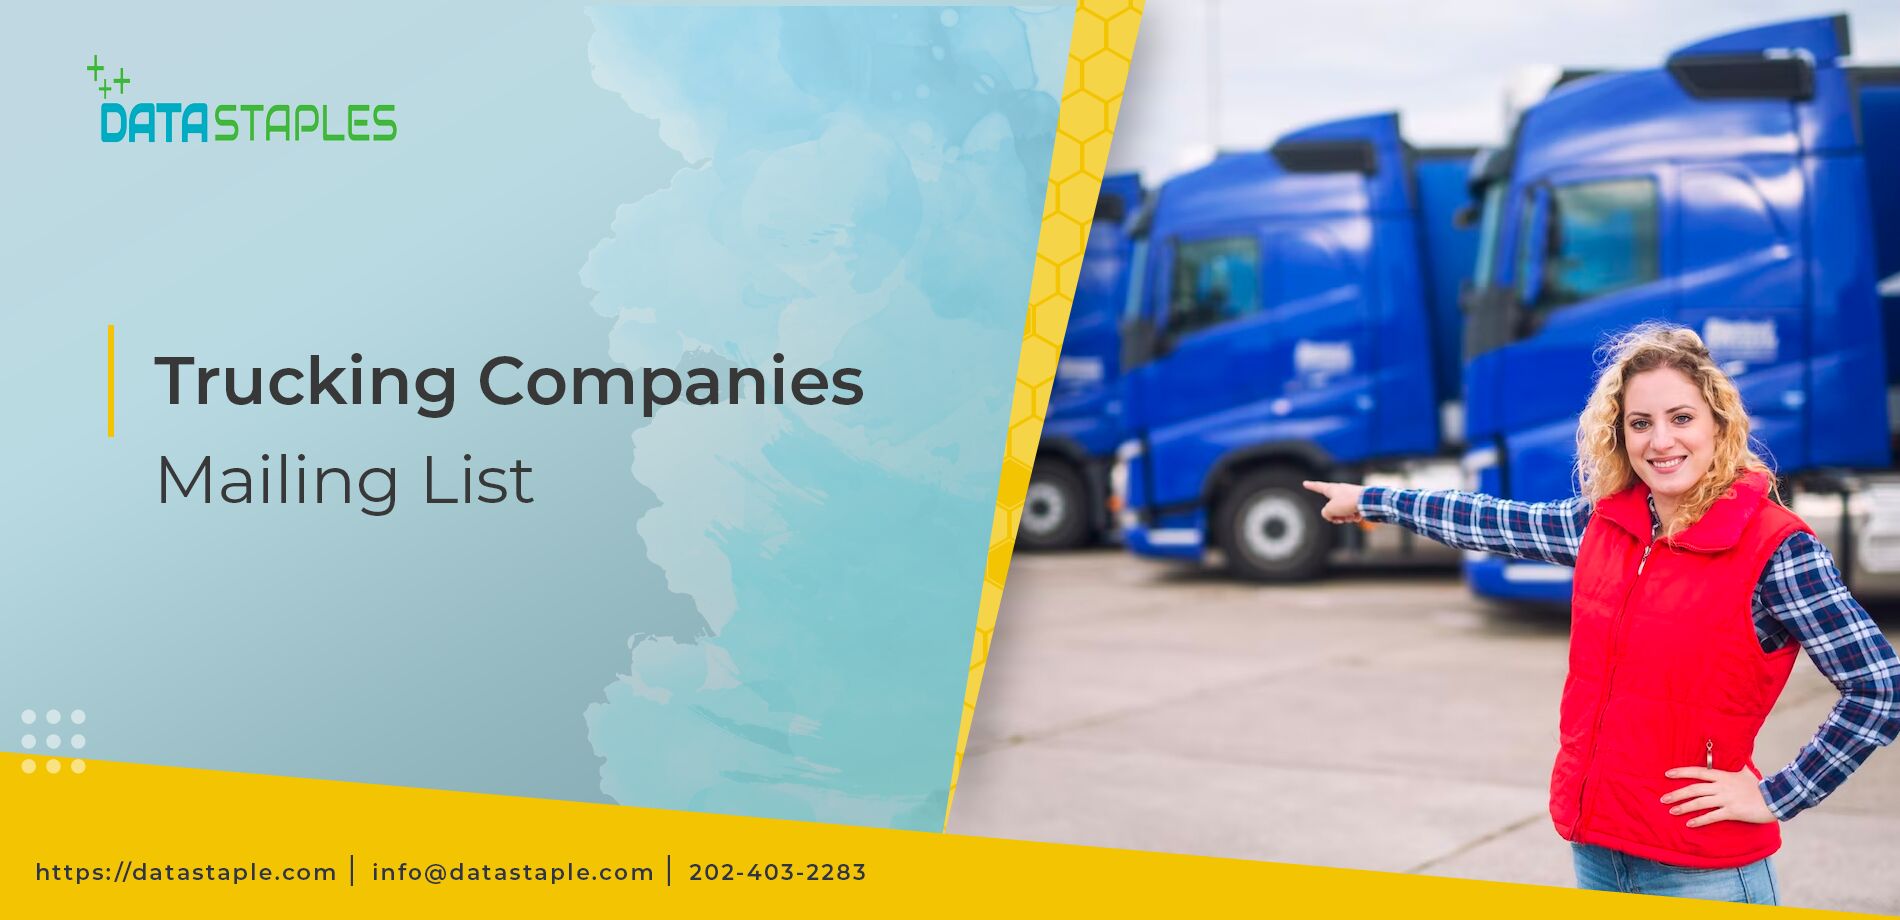 Trucking Companies Email List | DataStaples